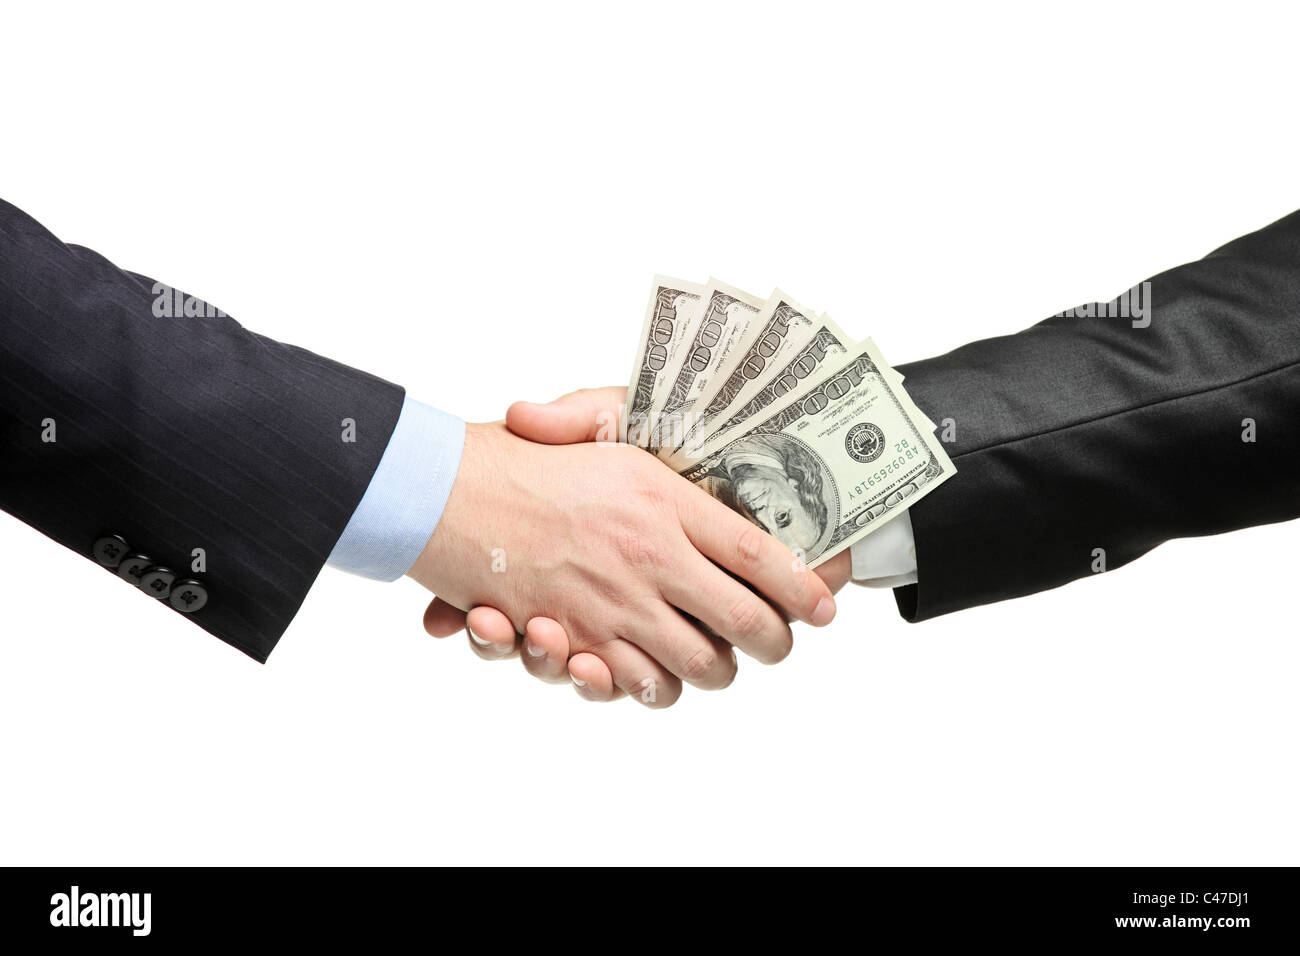 Handshake with money Stock Photo - Alamy